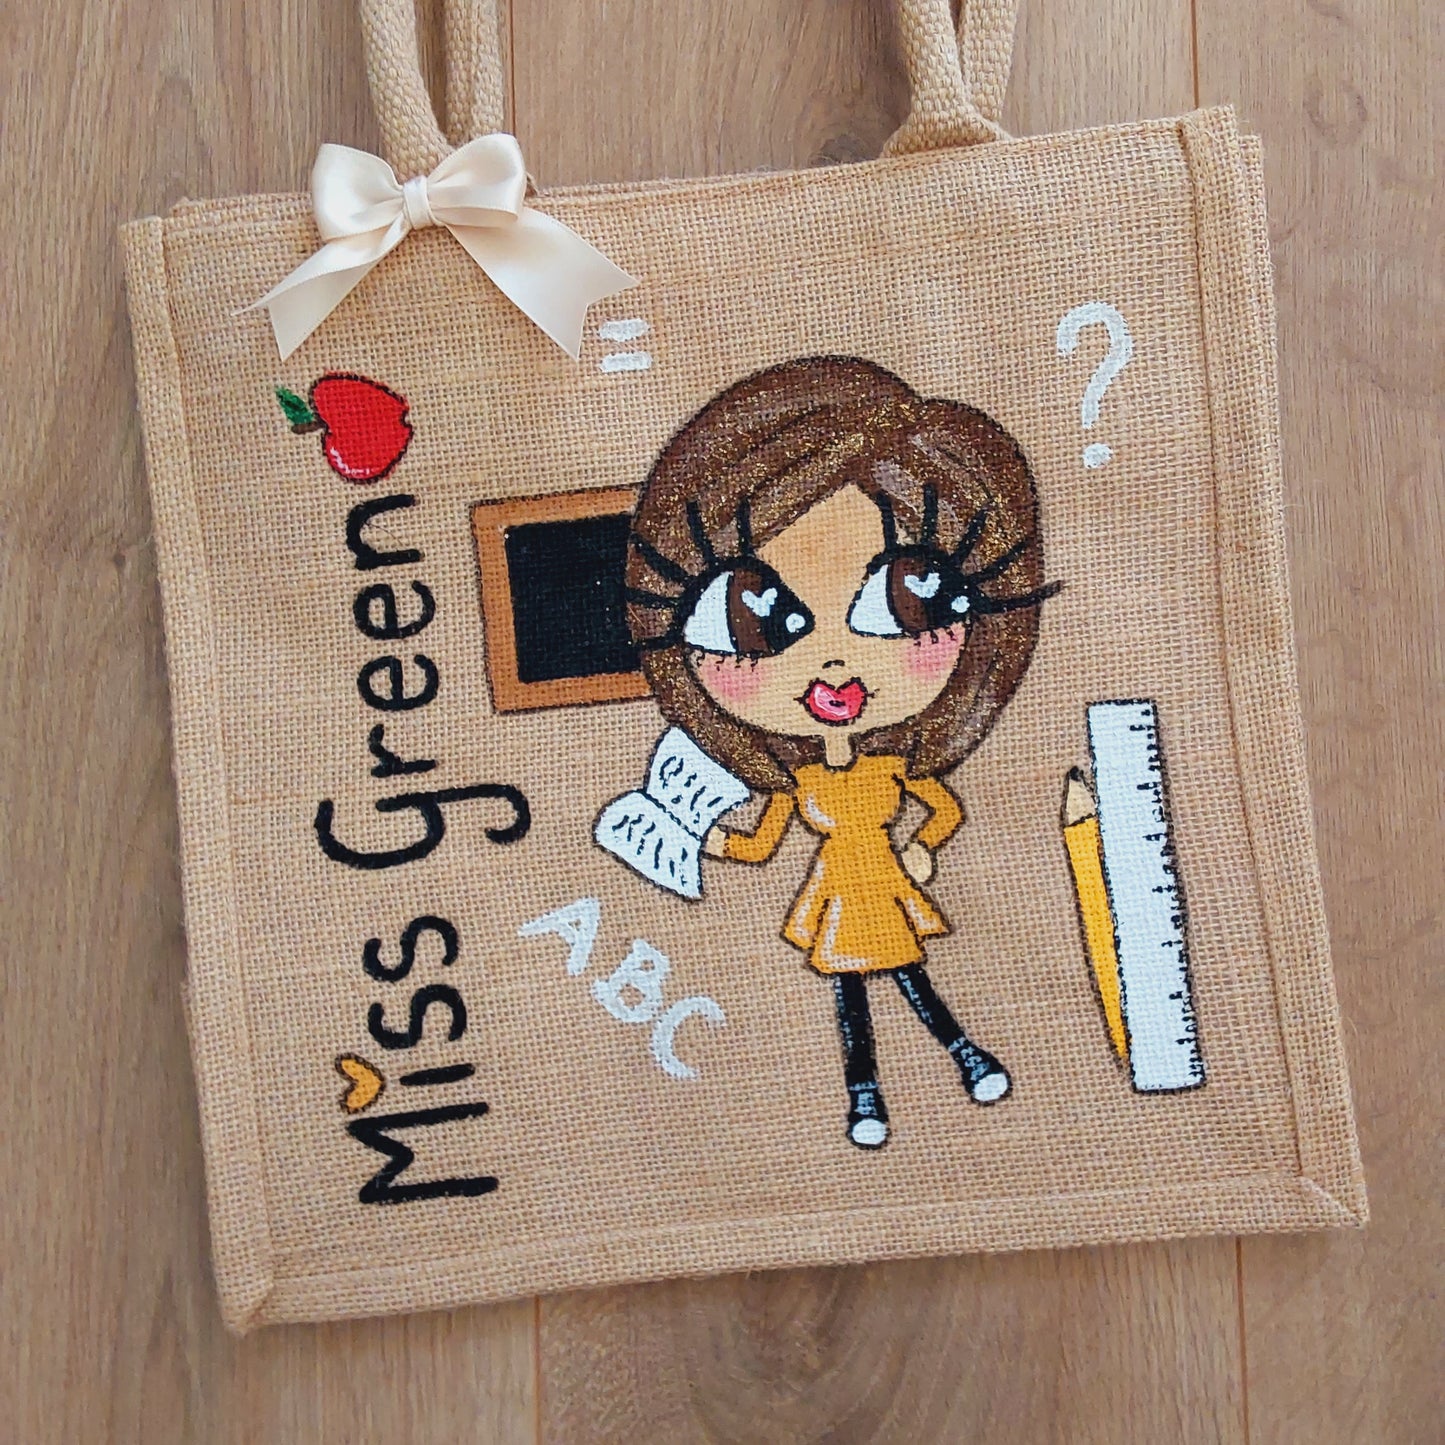 Personalised hand painted jute bag for teacher